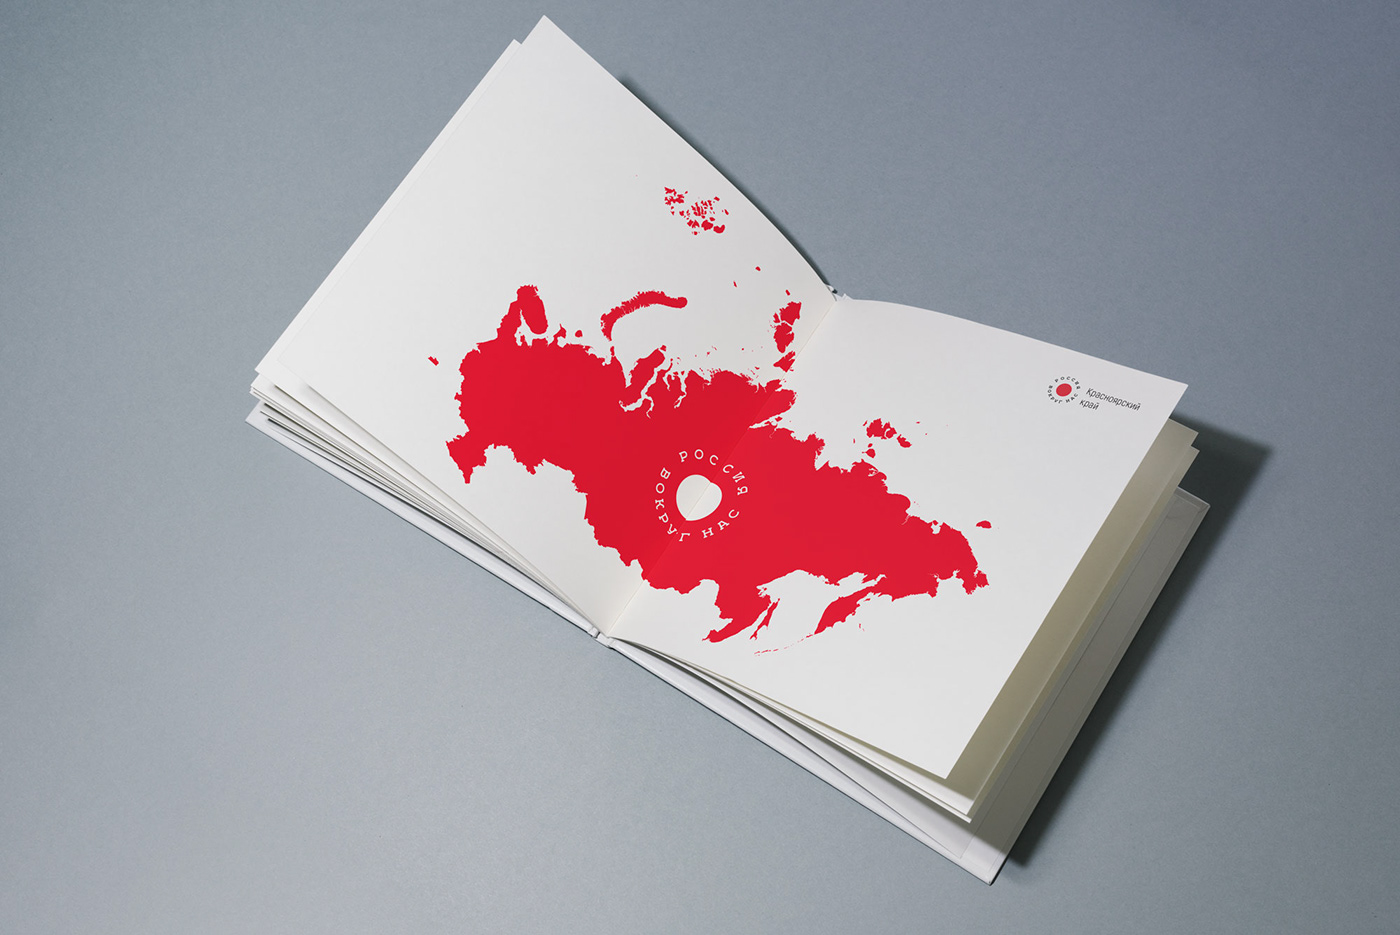 красноярск марка город брендинг города логотип корона Россия Siberia